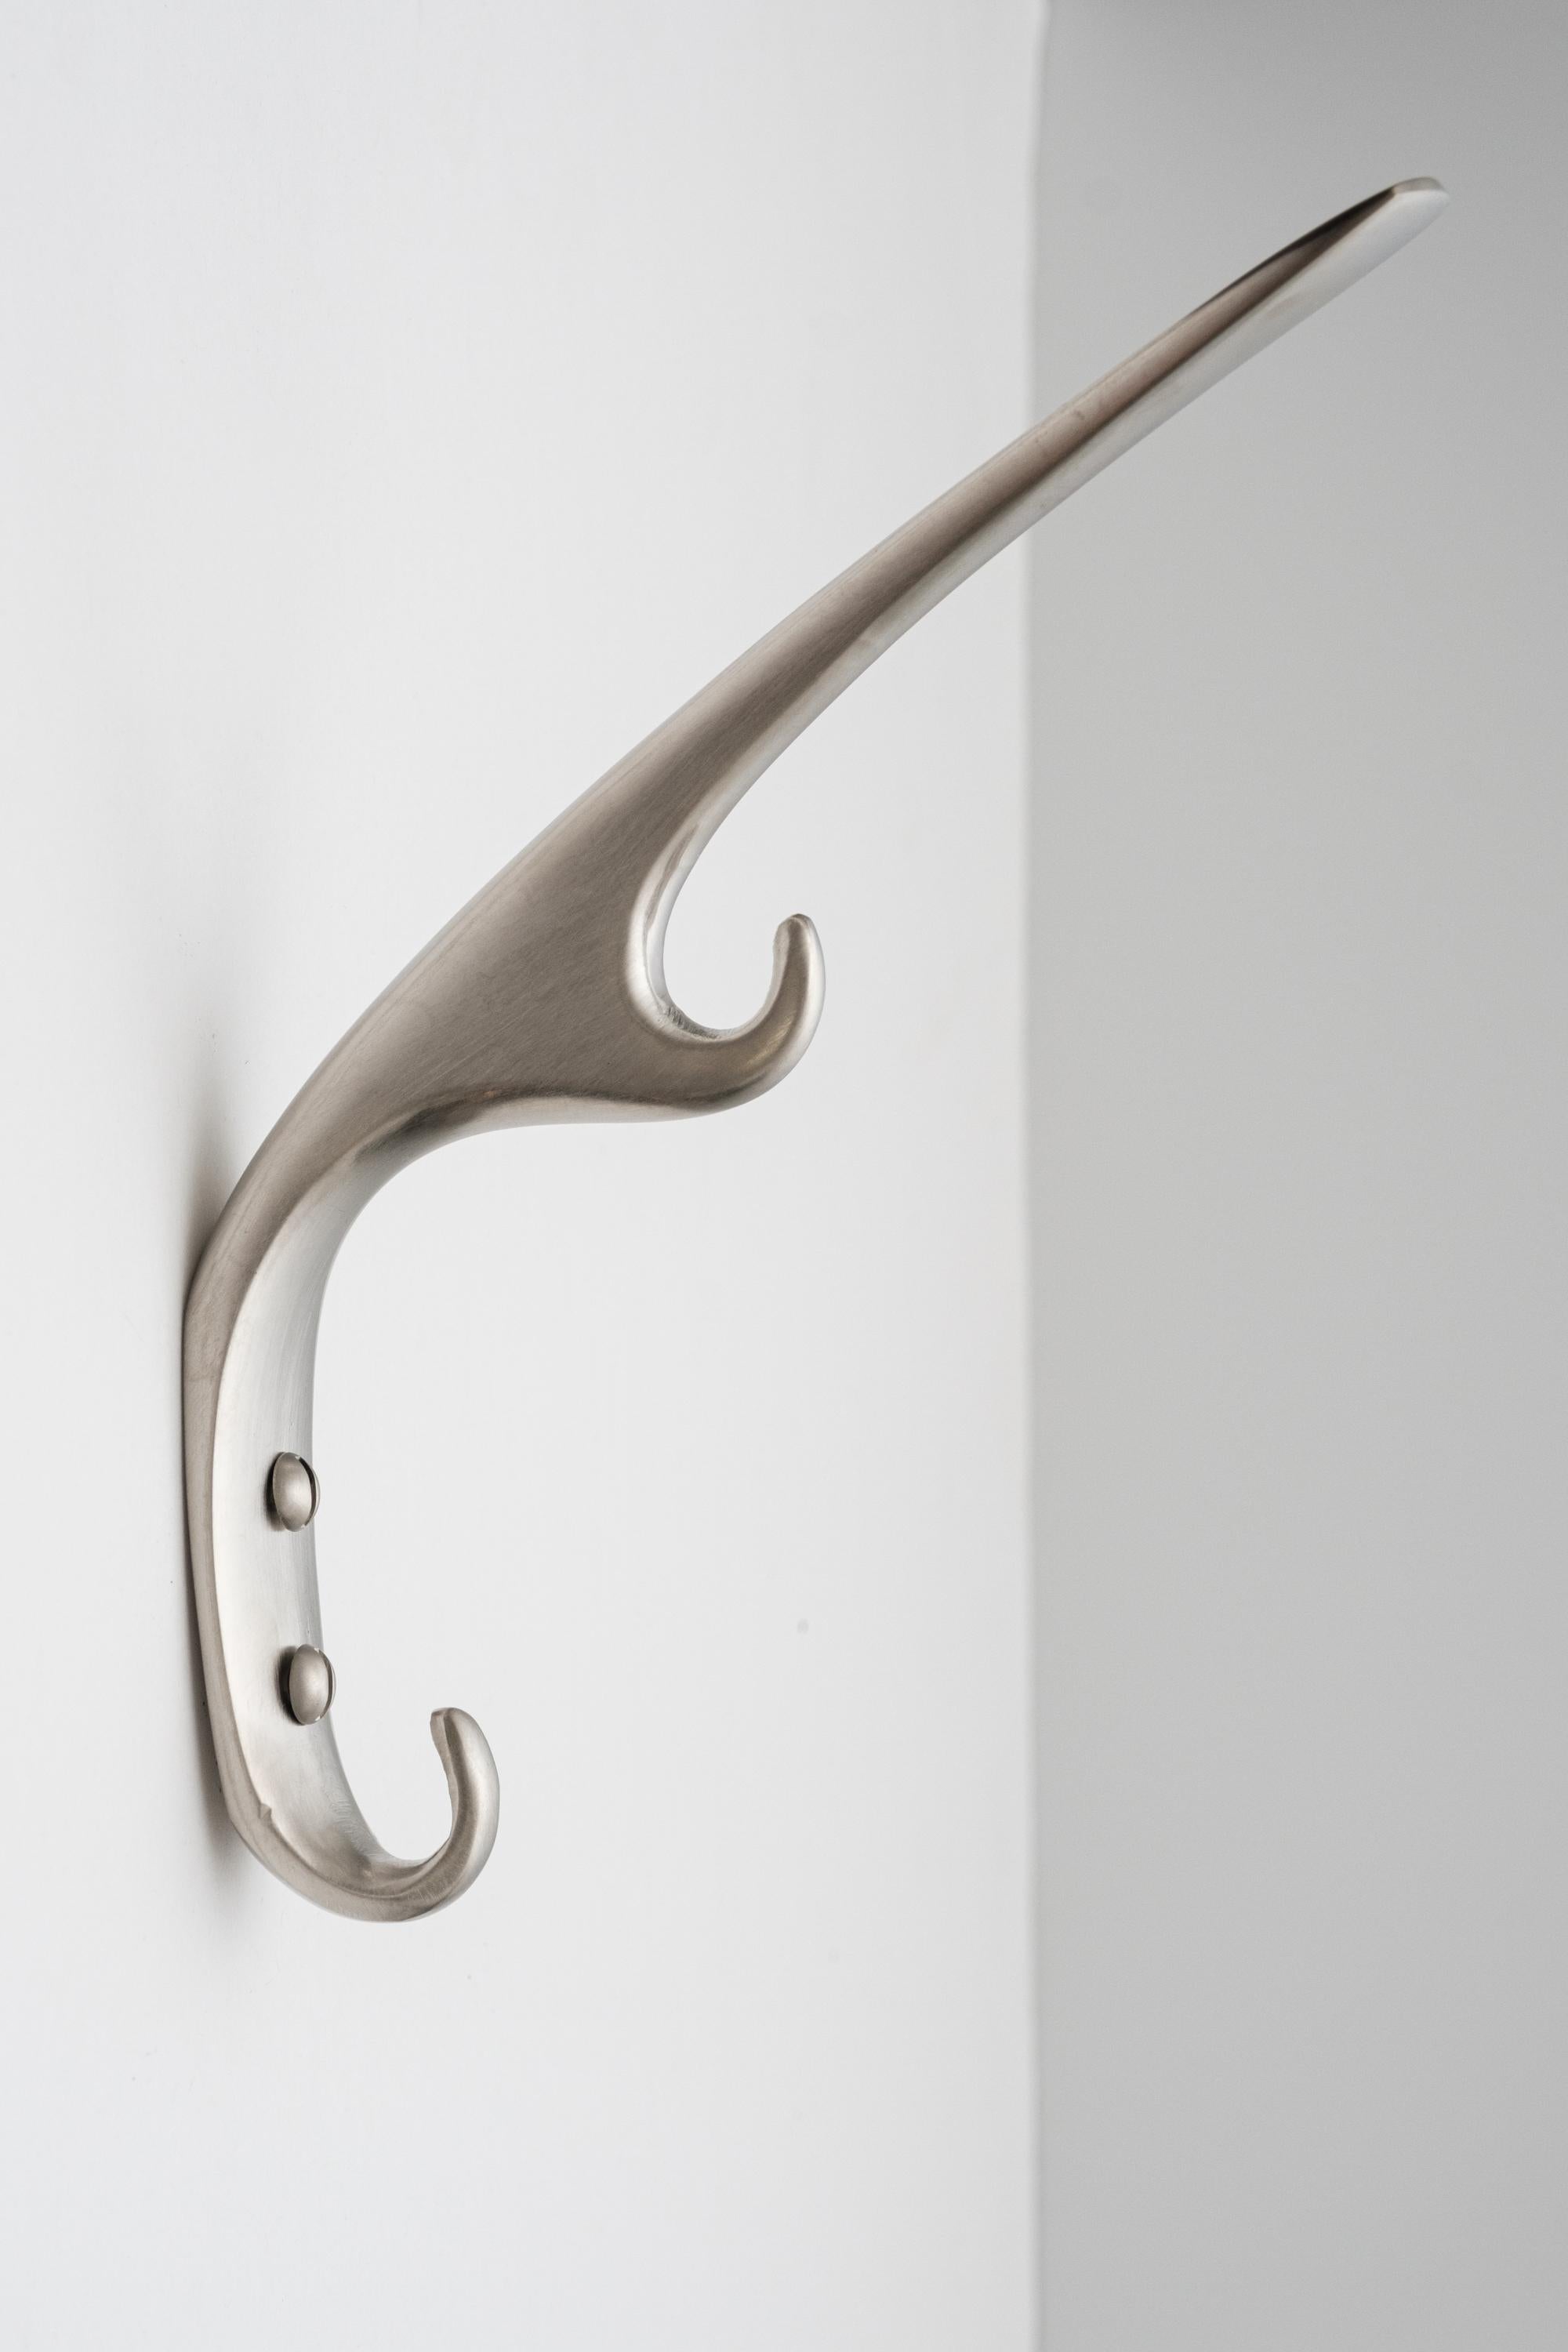 Contemporary Carl Auböck Model #5439 Hook in Nickel For Sale